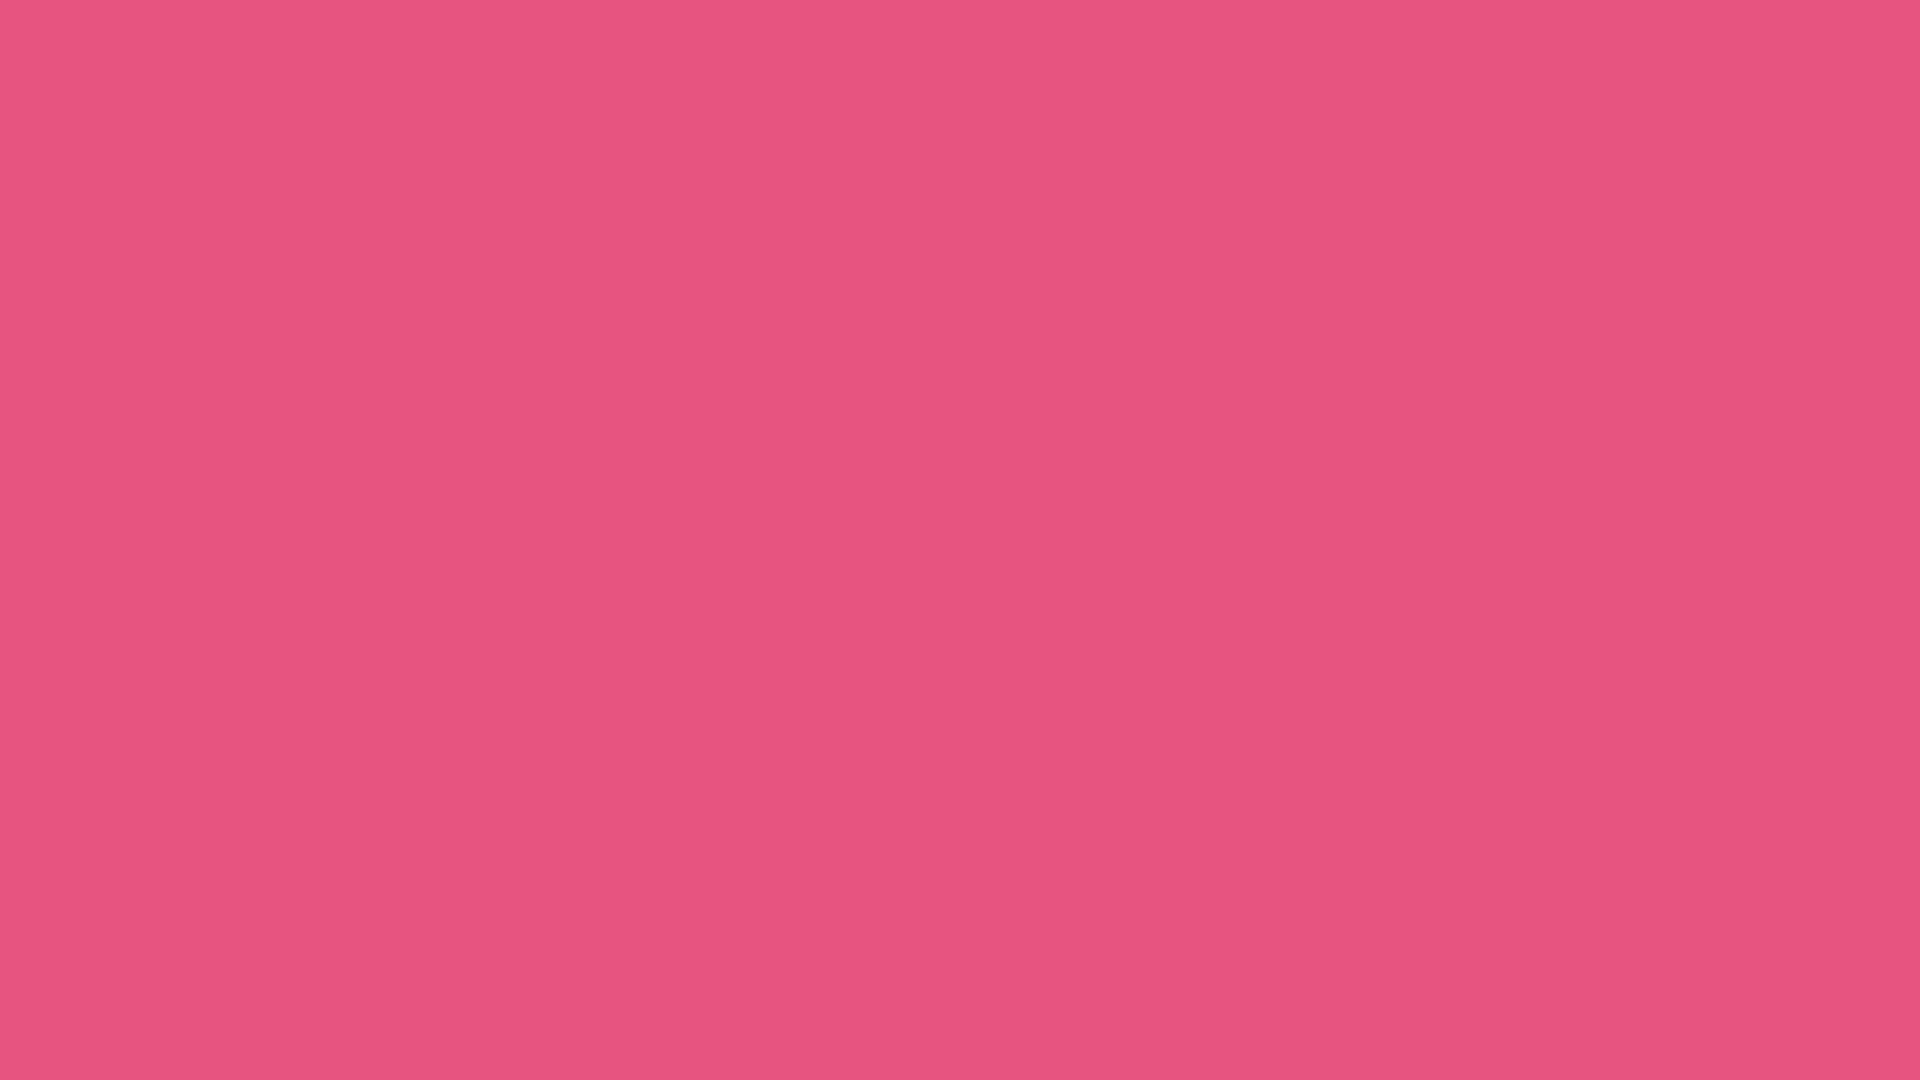 1920x1080 Dark Pink Solid Color Background